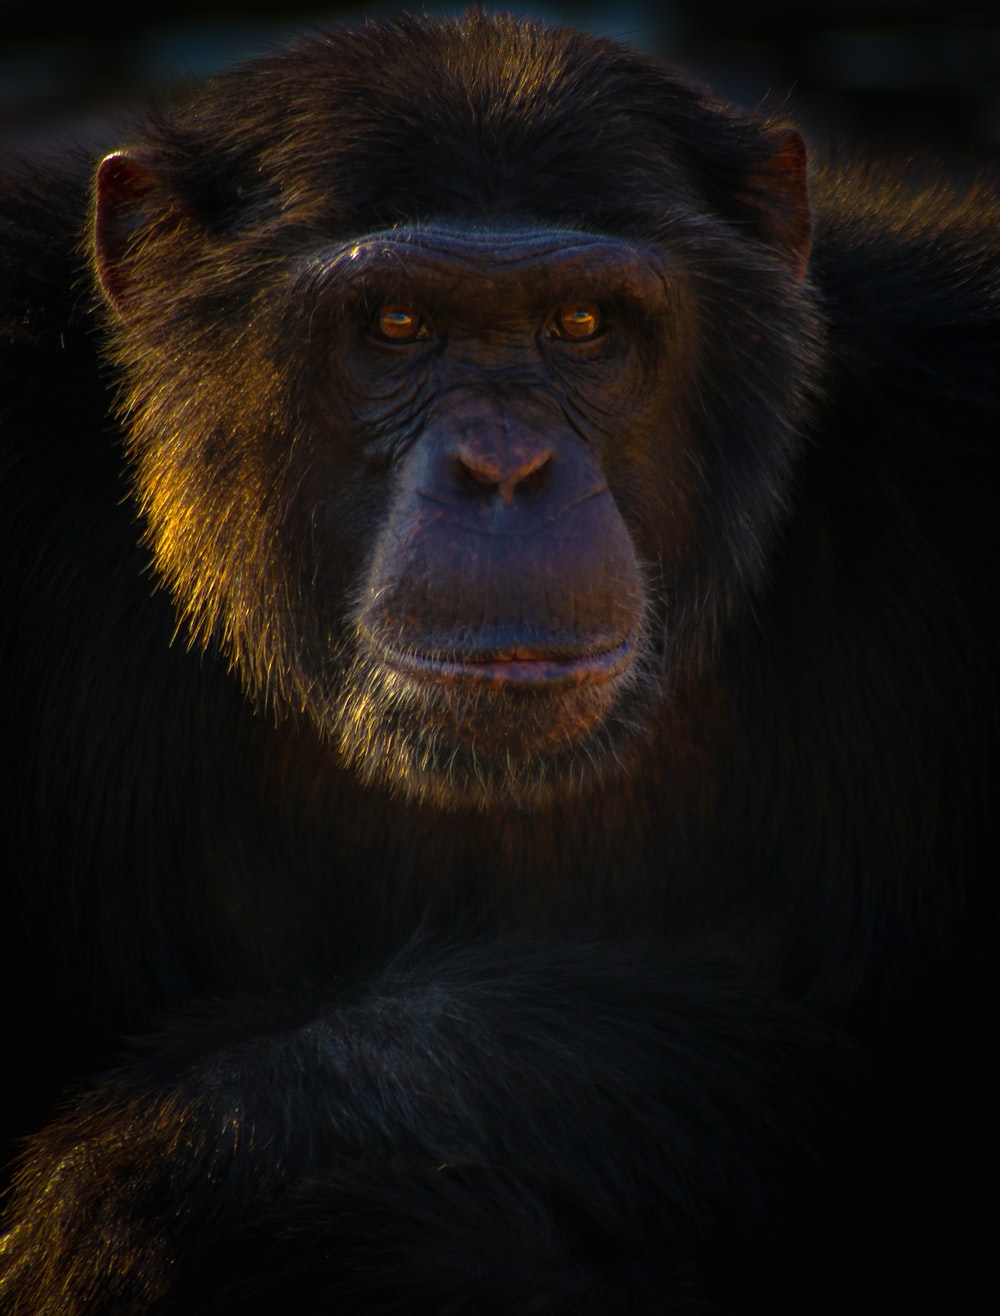 Chimpanzee Picture. Download Free Image